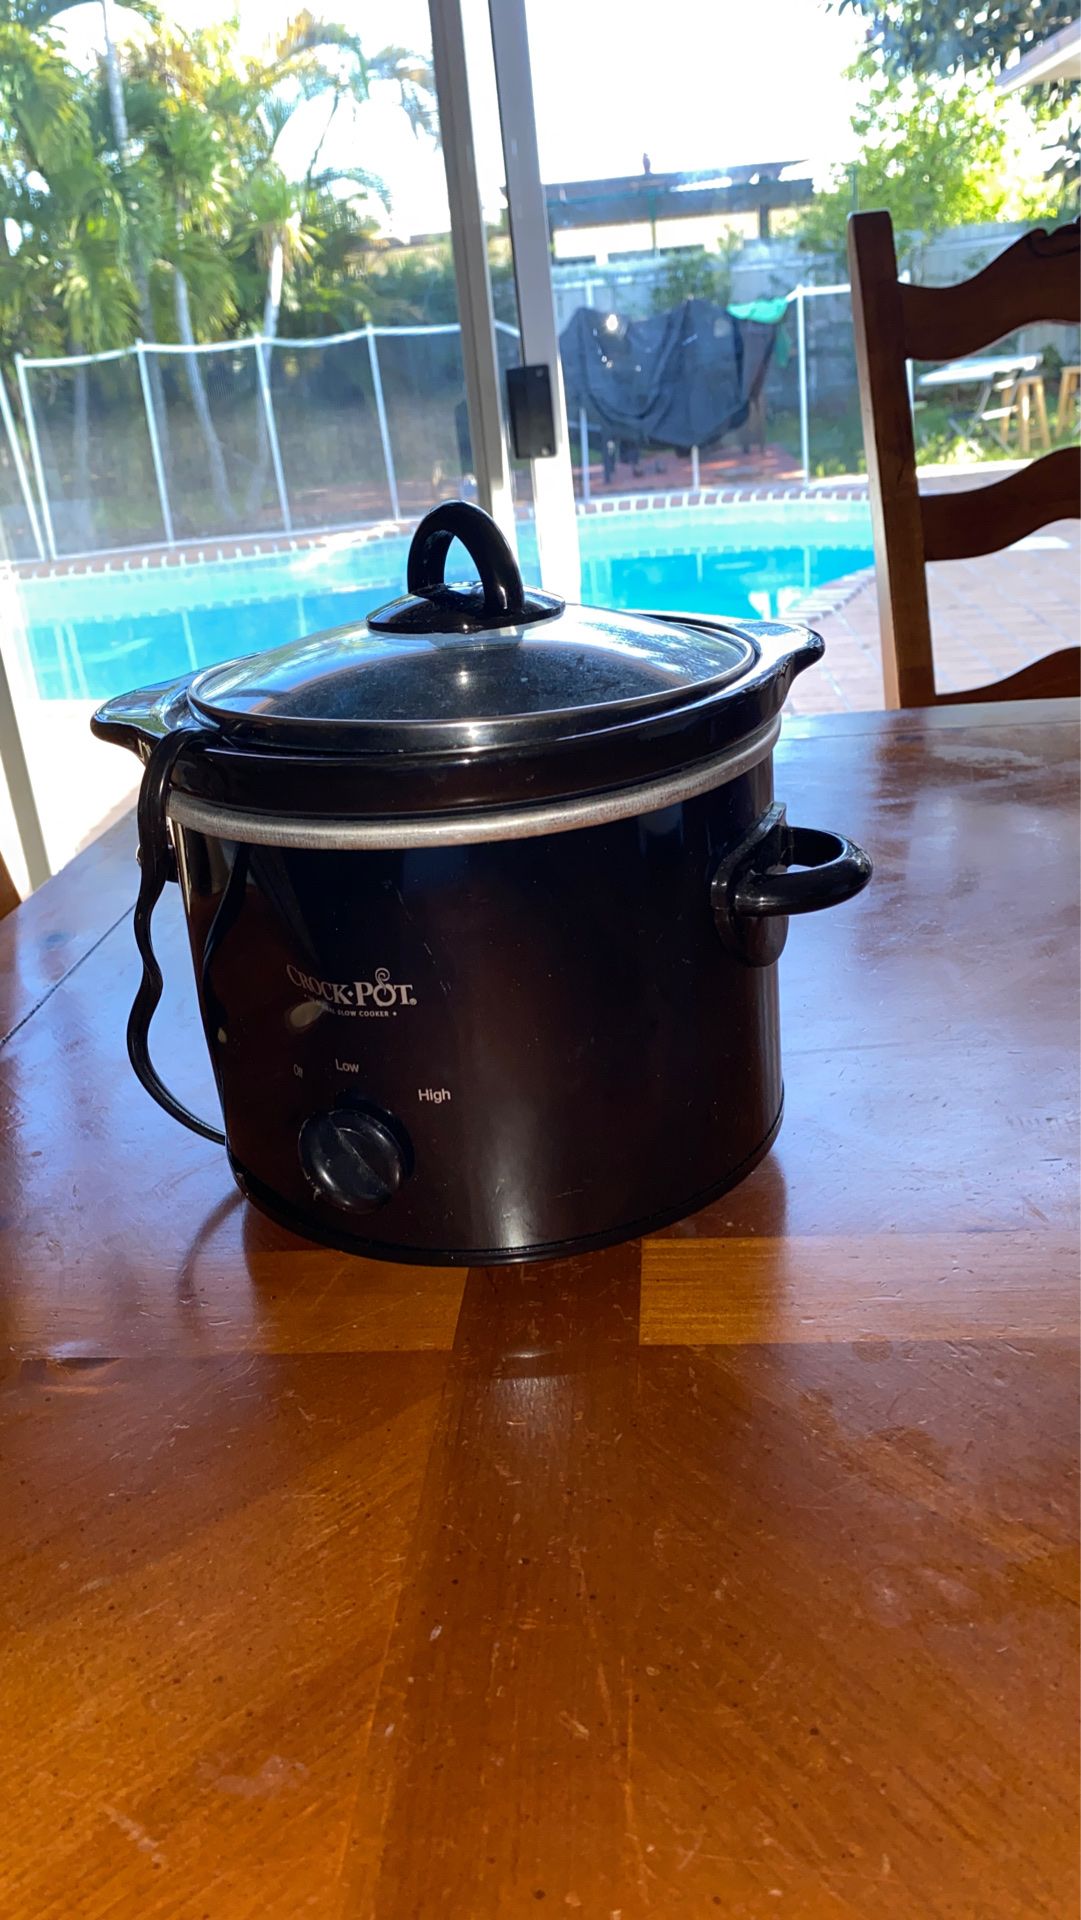 Crock-Pot: the Original Slow Cooker